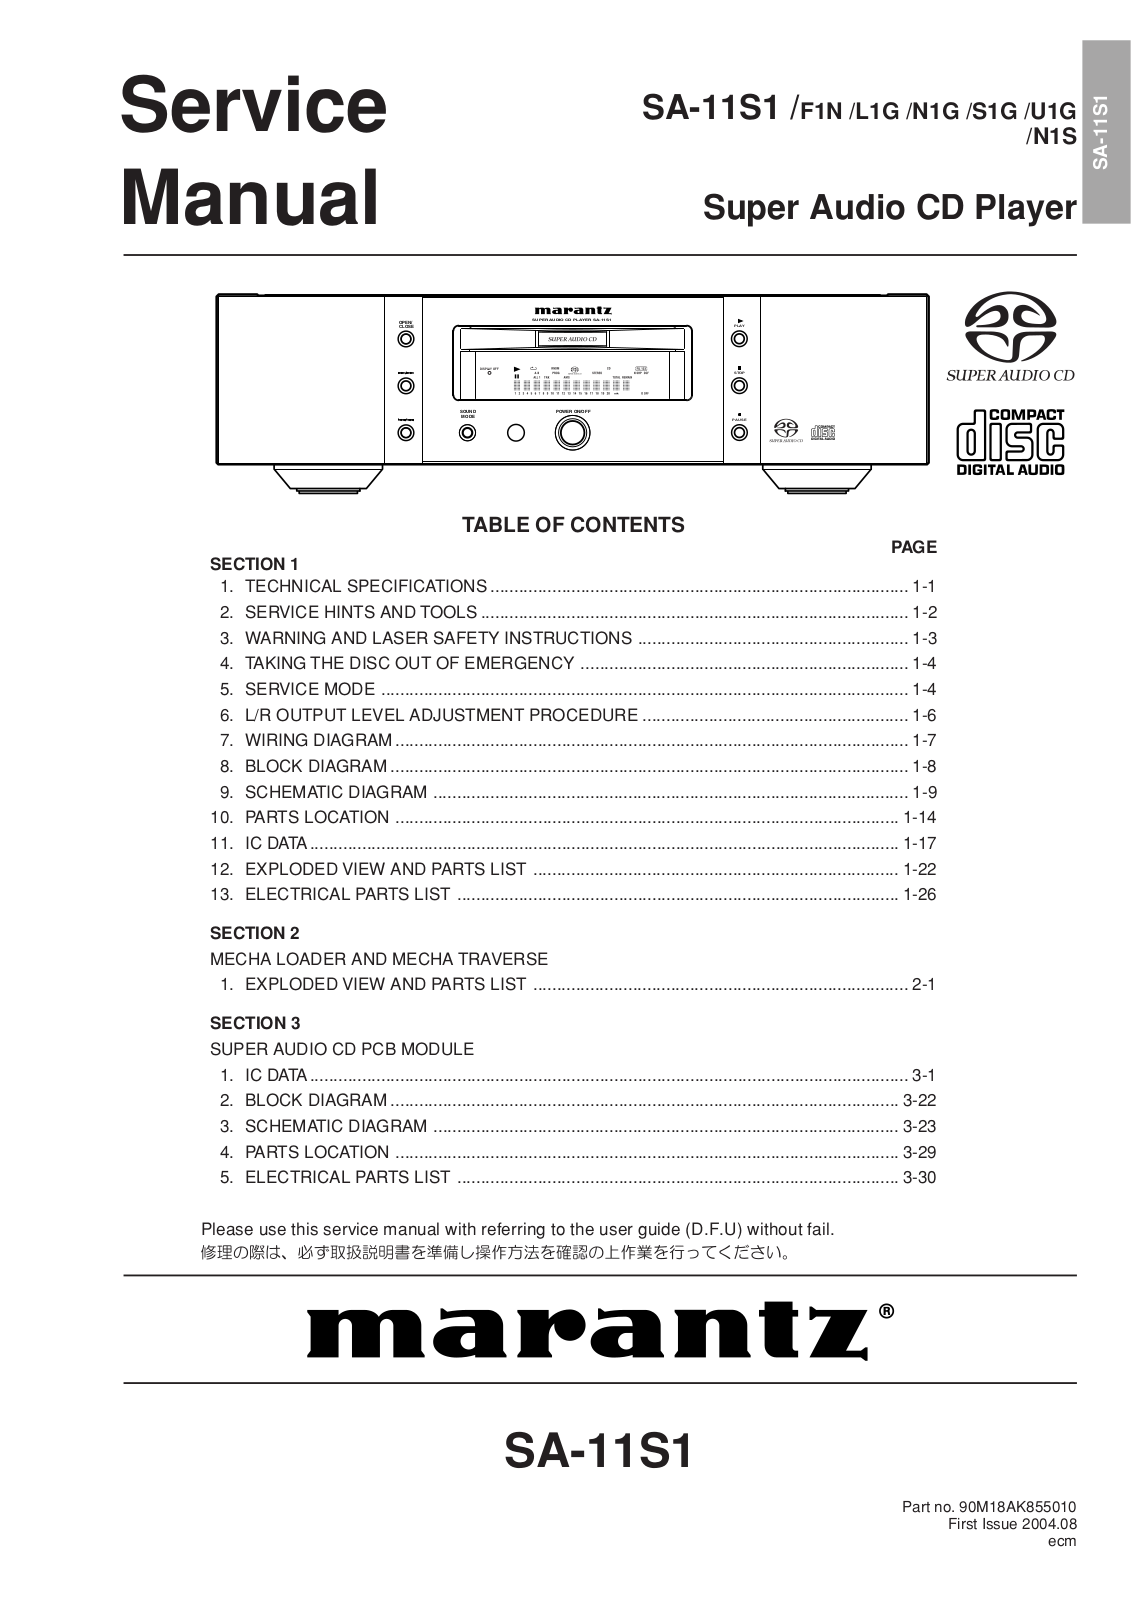 Marantz SA-11, S-1 Service Manual